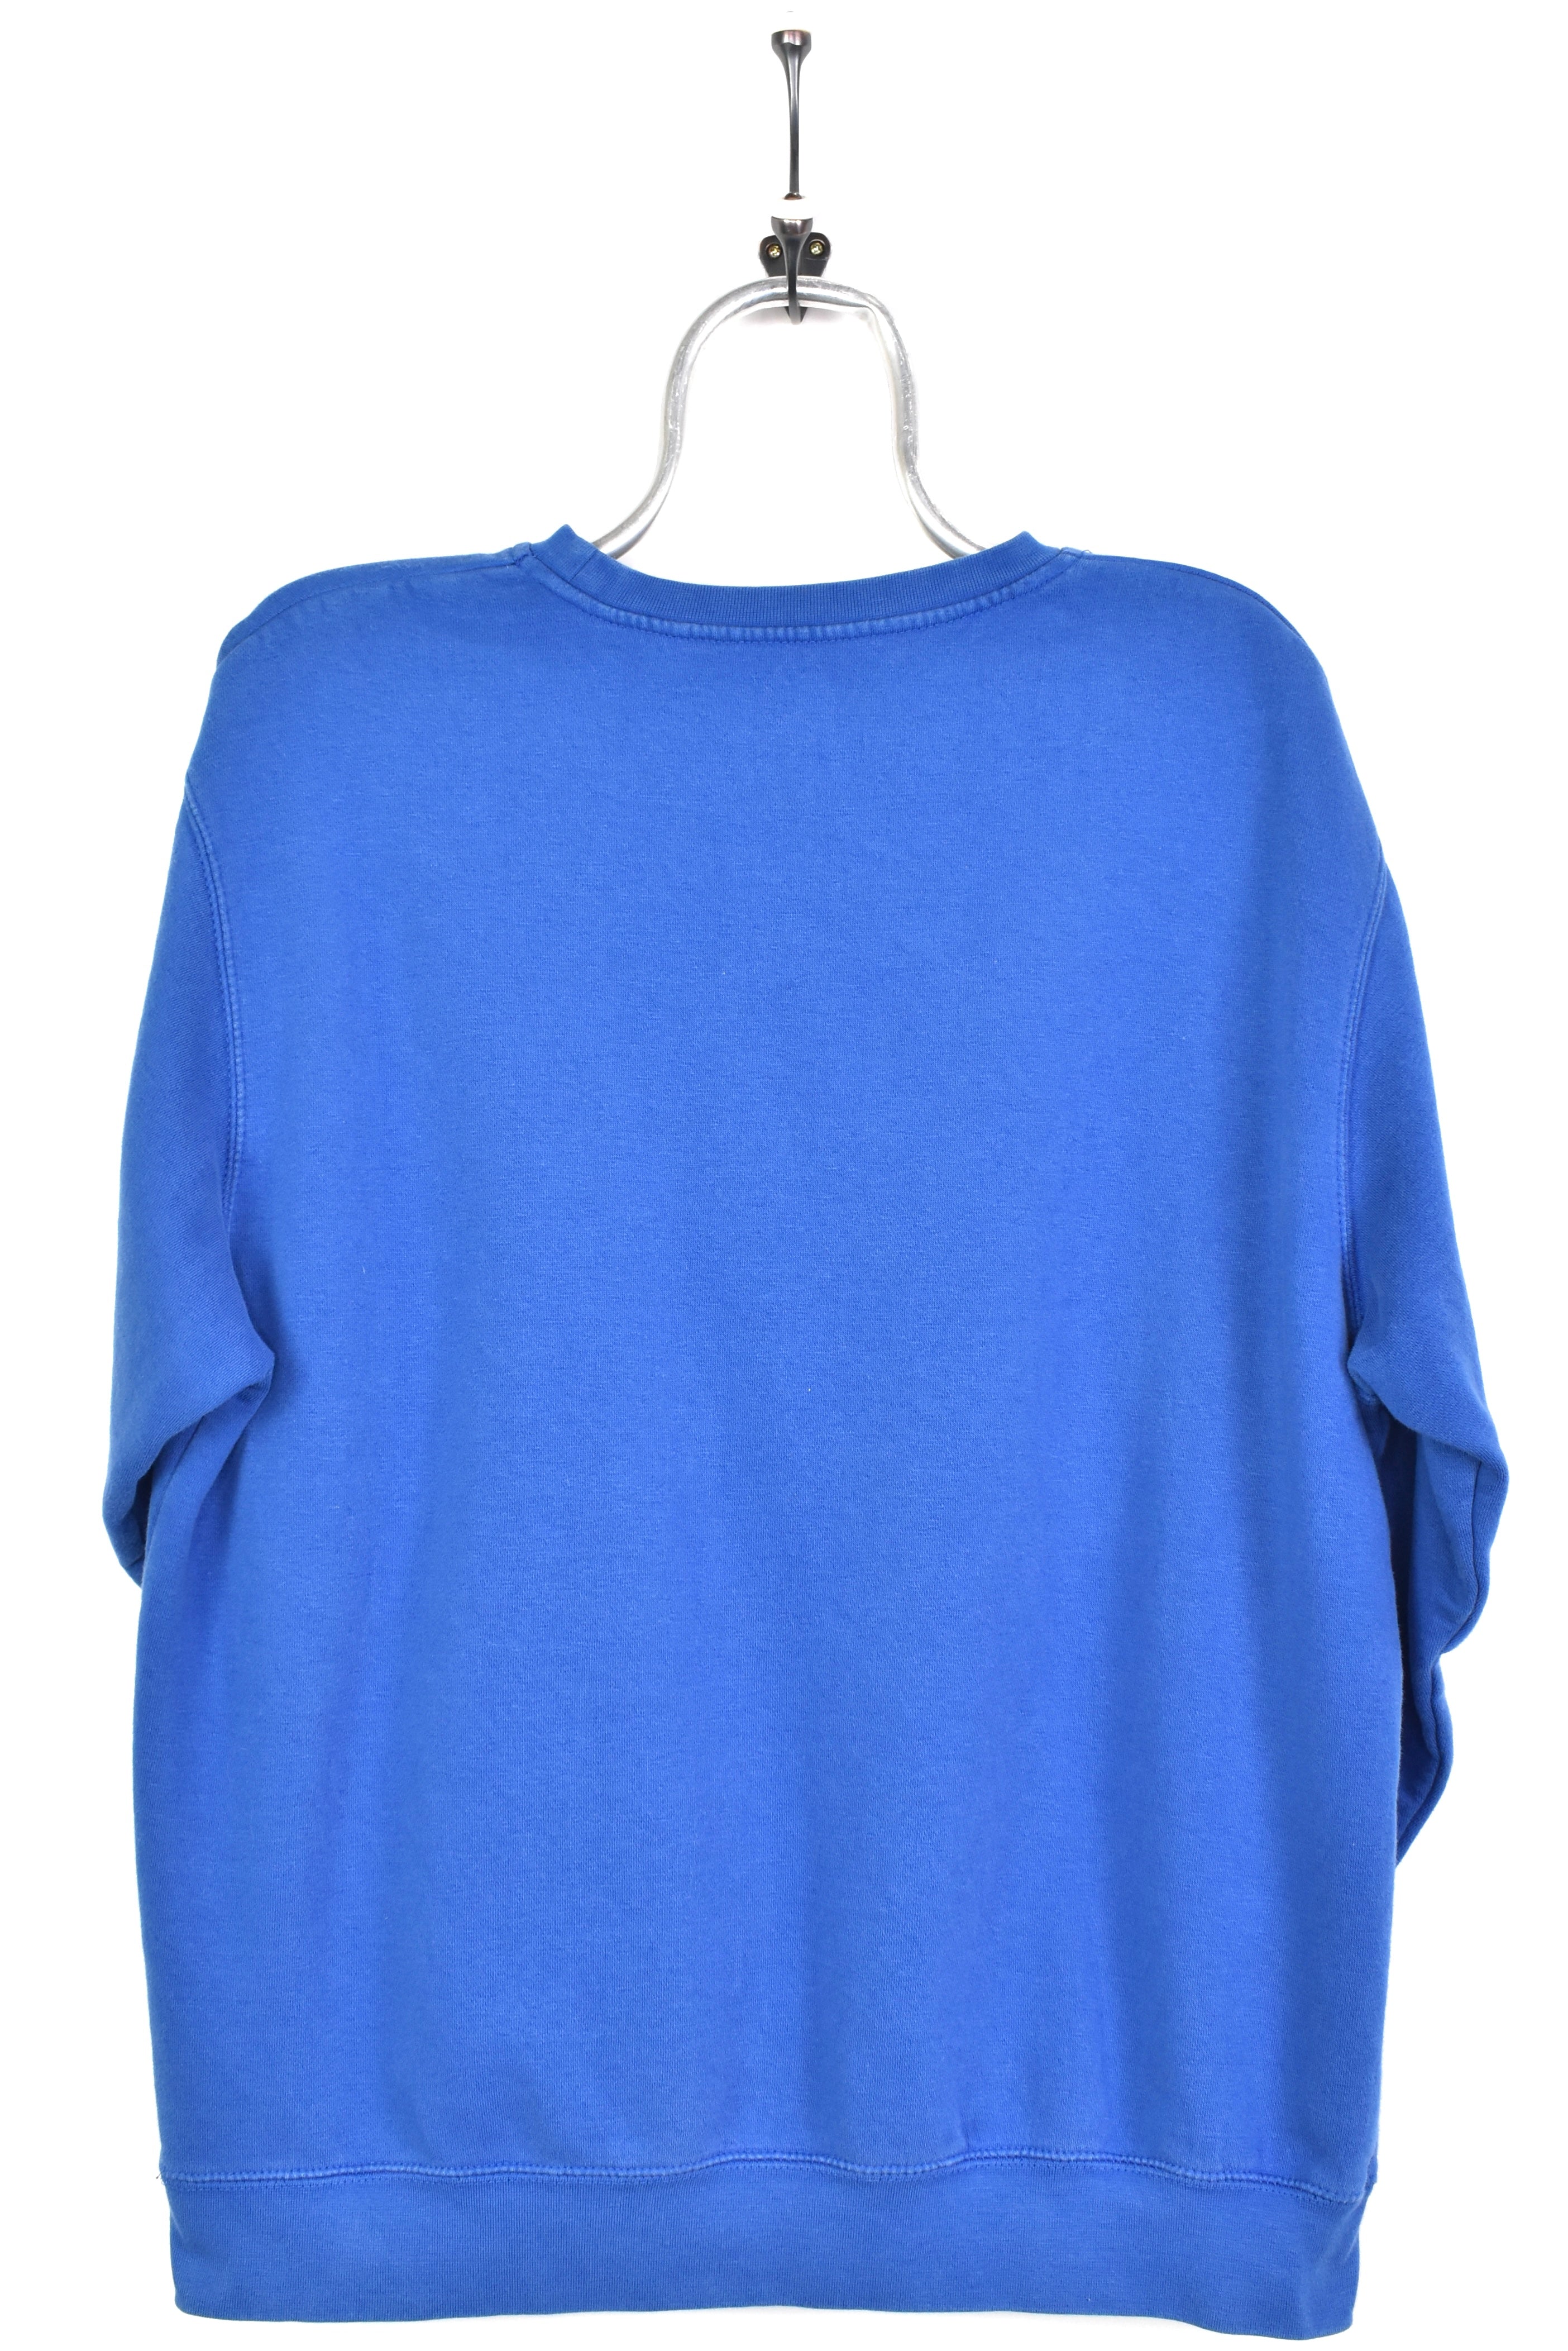 Vintage nfl indianapolis colts embroidered blue sweatshirt | large PRO SPORT